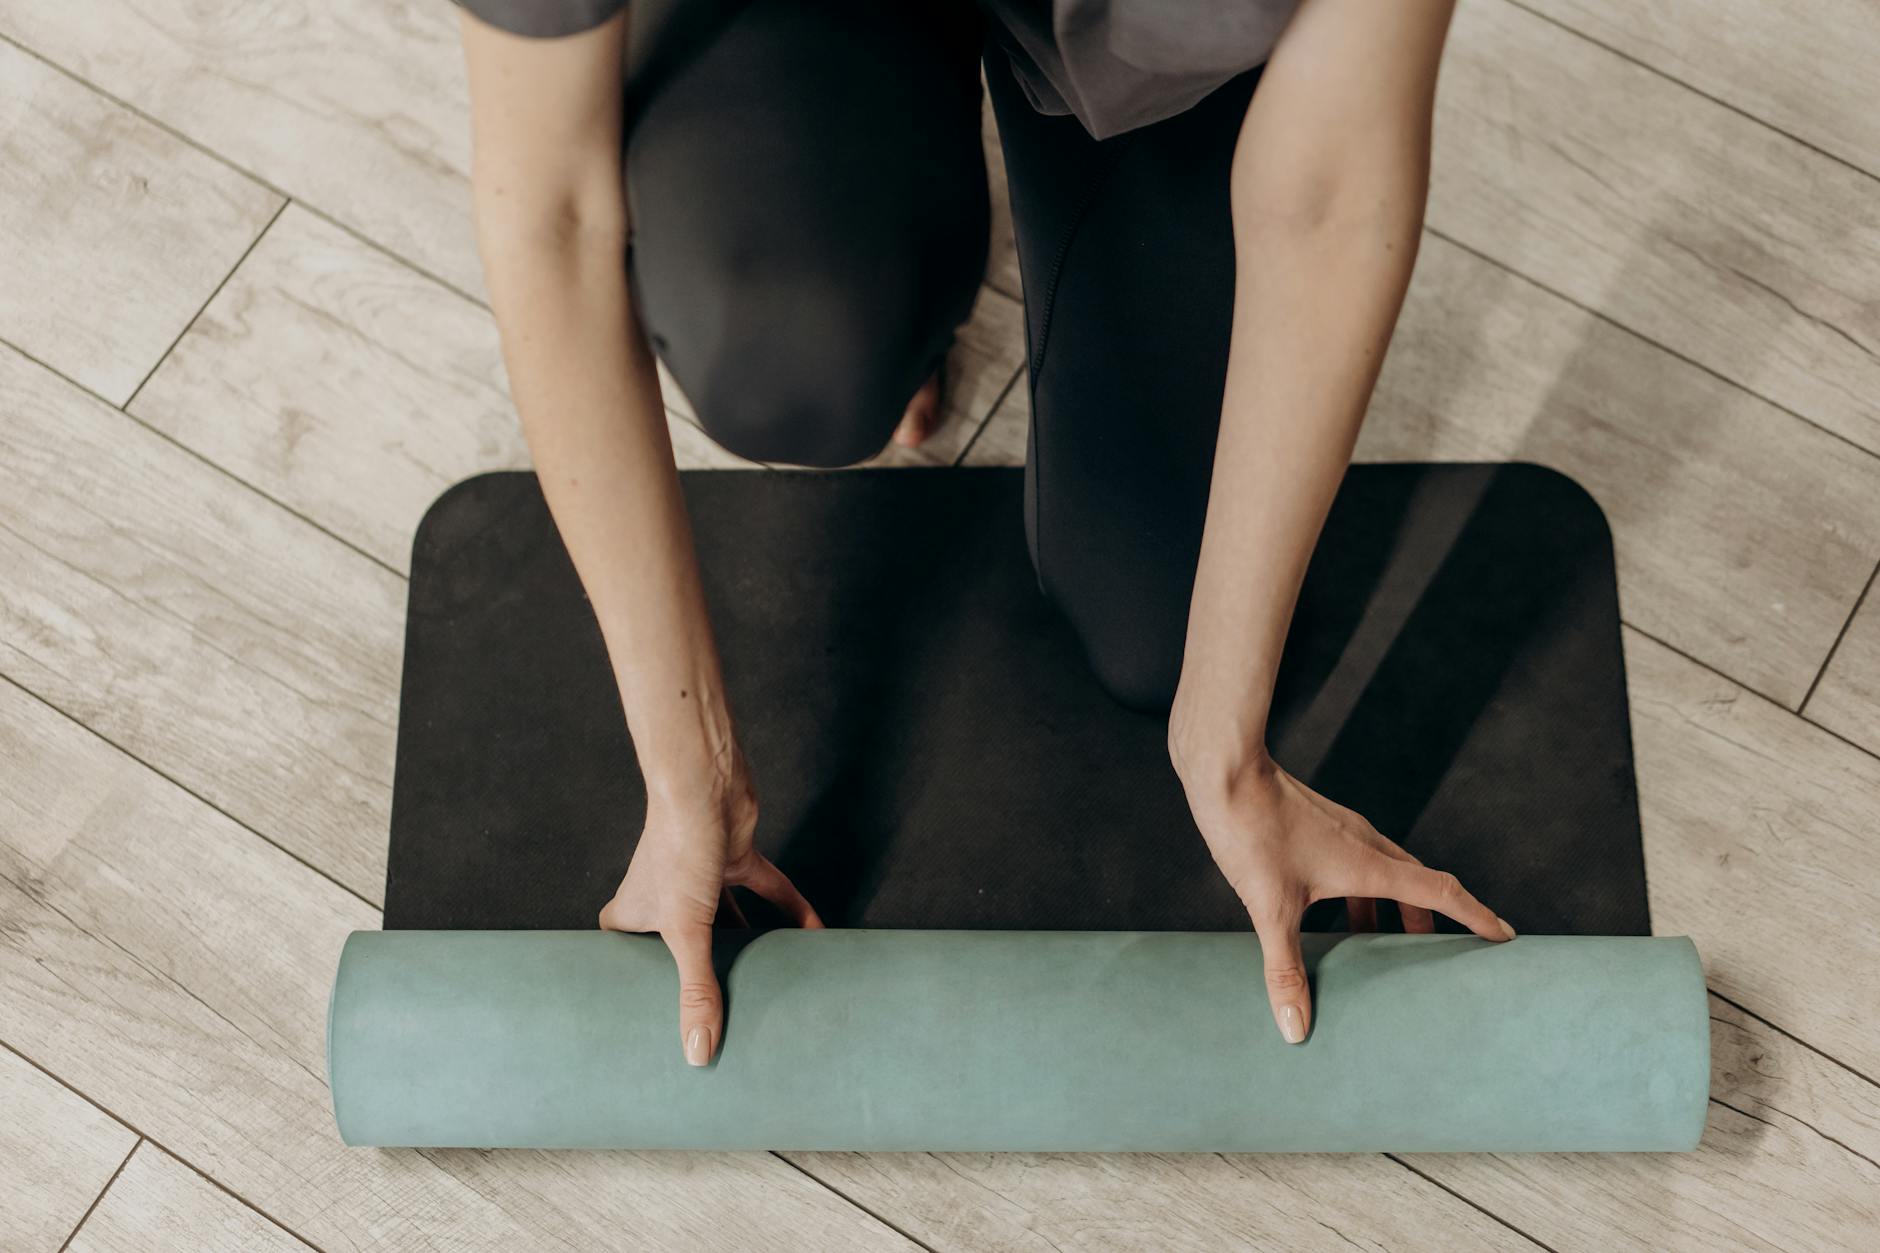 Woman in Black Leggings Unrolling A Yoga Mat